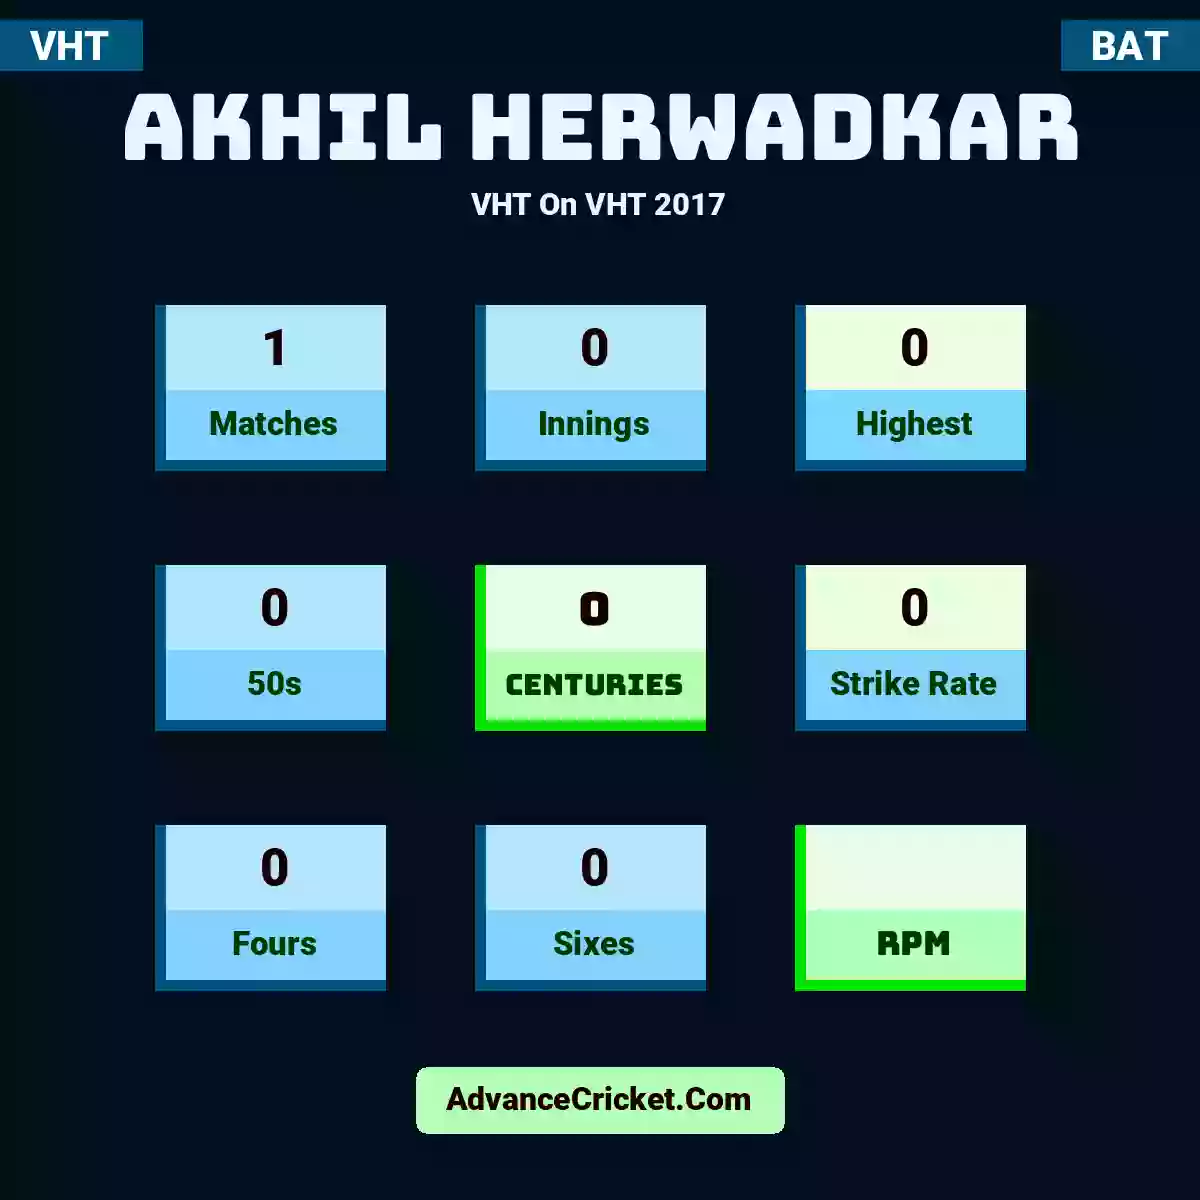 Akhil Herwadkar VHT  On VHT 2017, Akhil Herwadkar played 1 matches, scored 0 runs as highest, 0 half-centuries, and 0 centuries, with a strike rate of 0. A.Herwadkar hit 0 fours and 0 sixes.